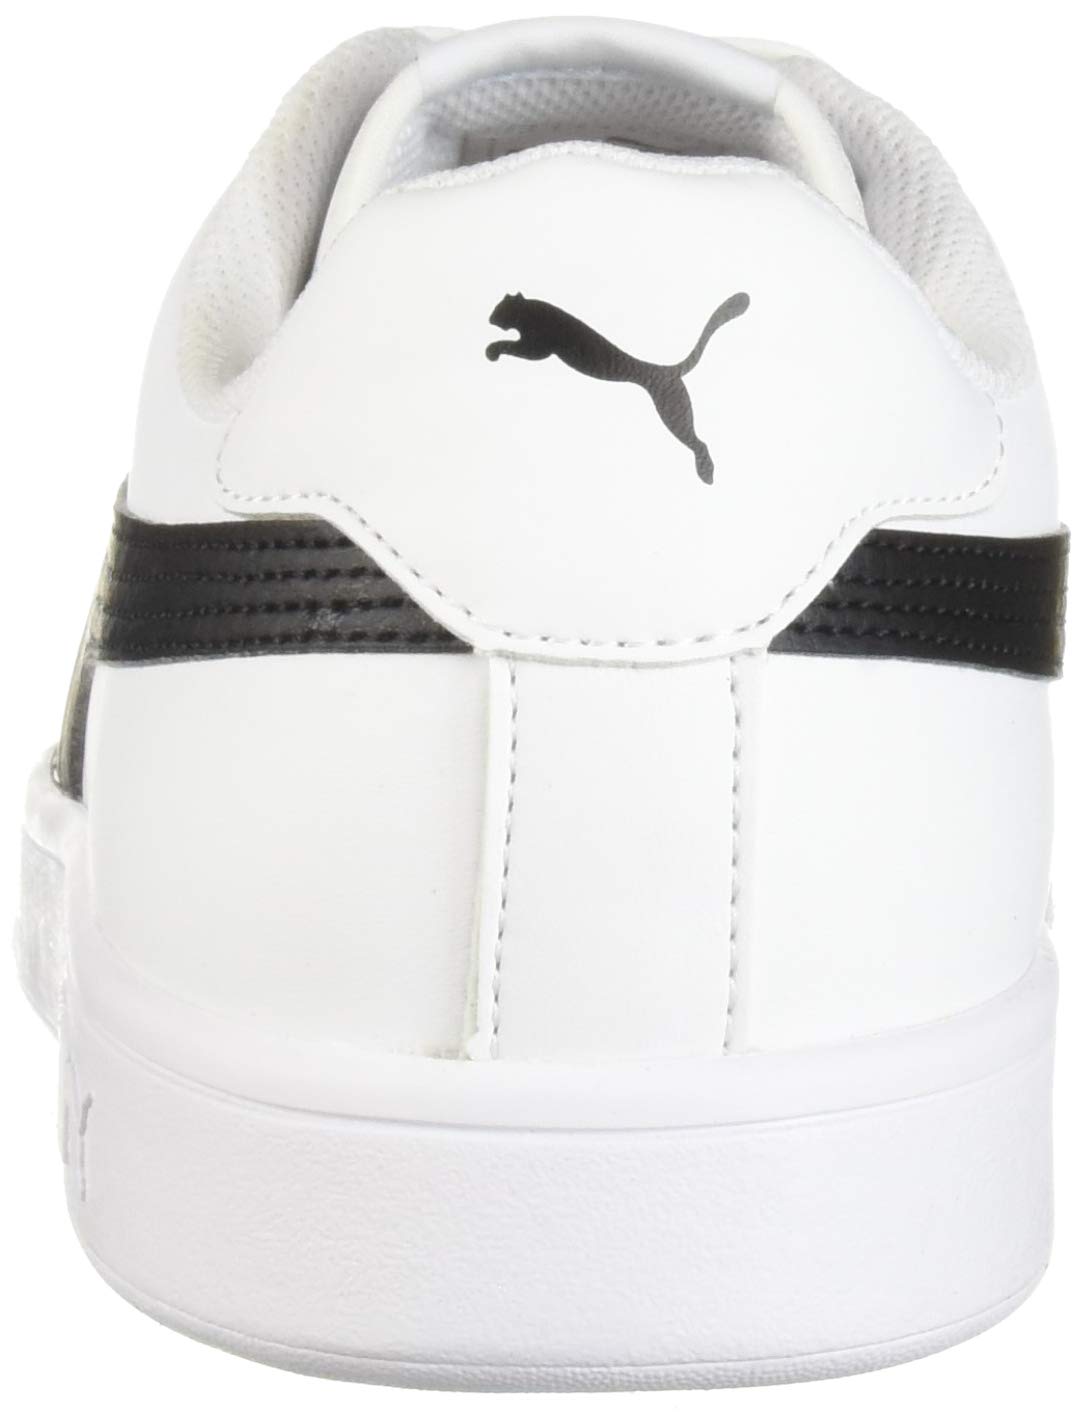 PUMA Men's Smash V2 Casual Sneaker - White or Black Mens Tennis Shoes (White/Black, 8) - image 3 of 8